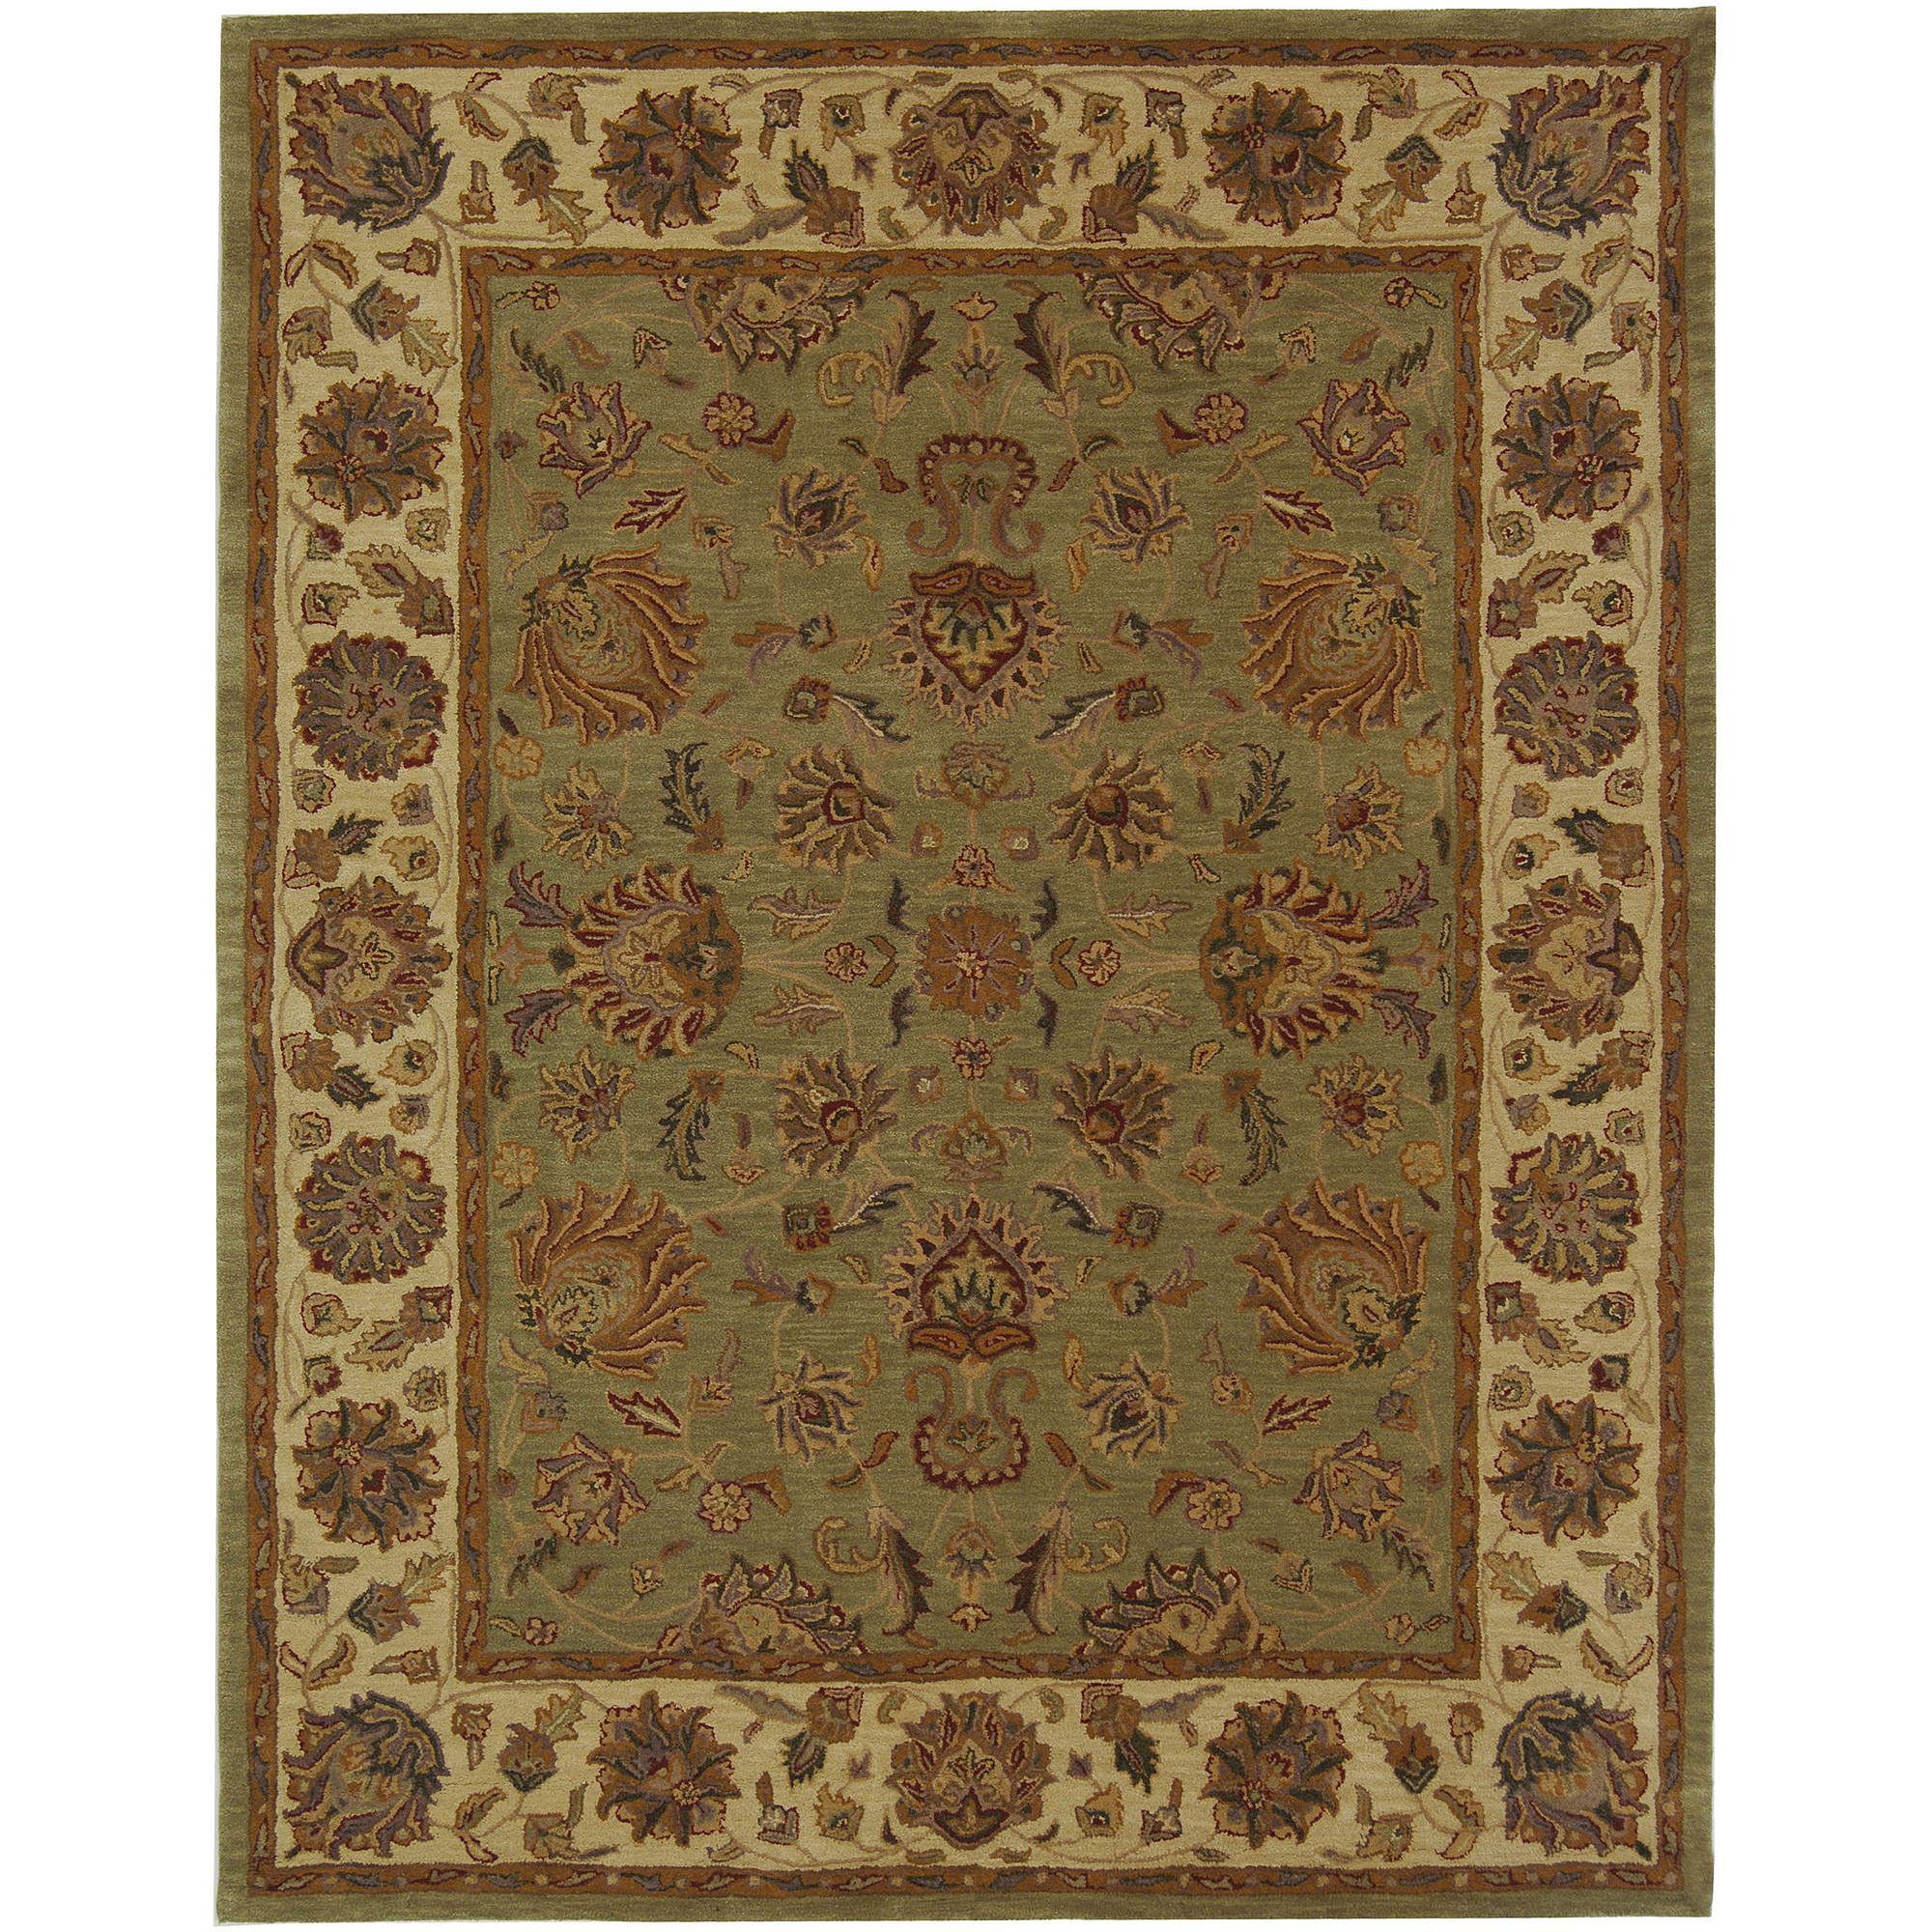 SAFAVIEH Heritage Regis Traditional Wool Area Rug, Green/Gold, 9'6" x 13'6" - image 1 of 10